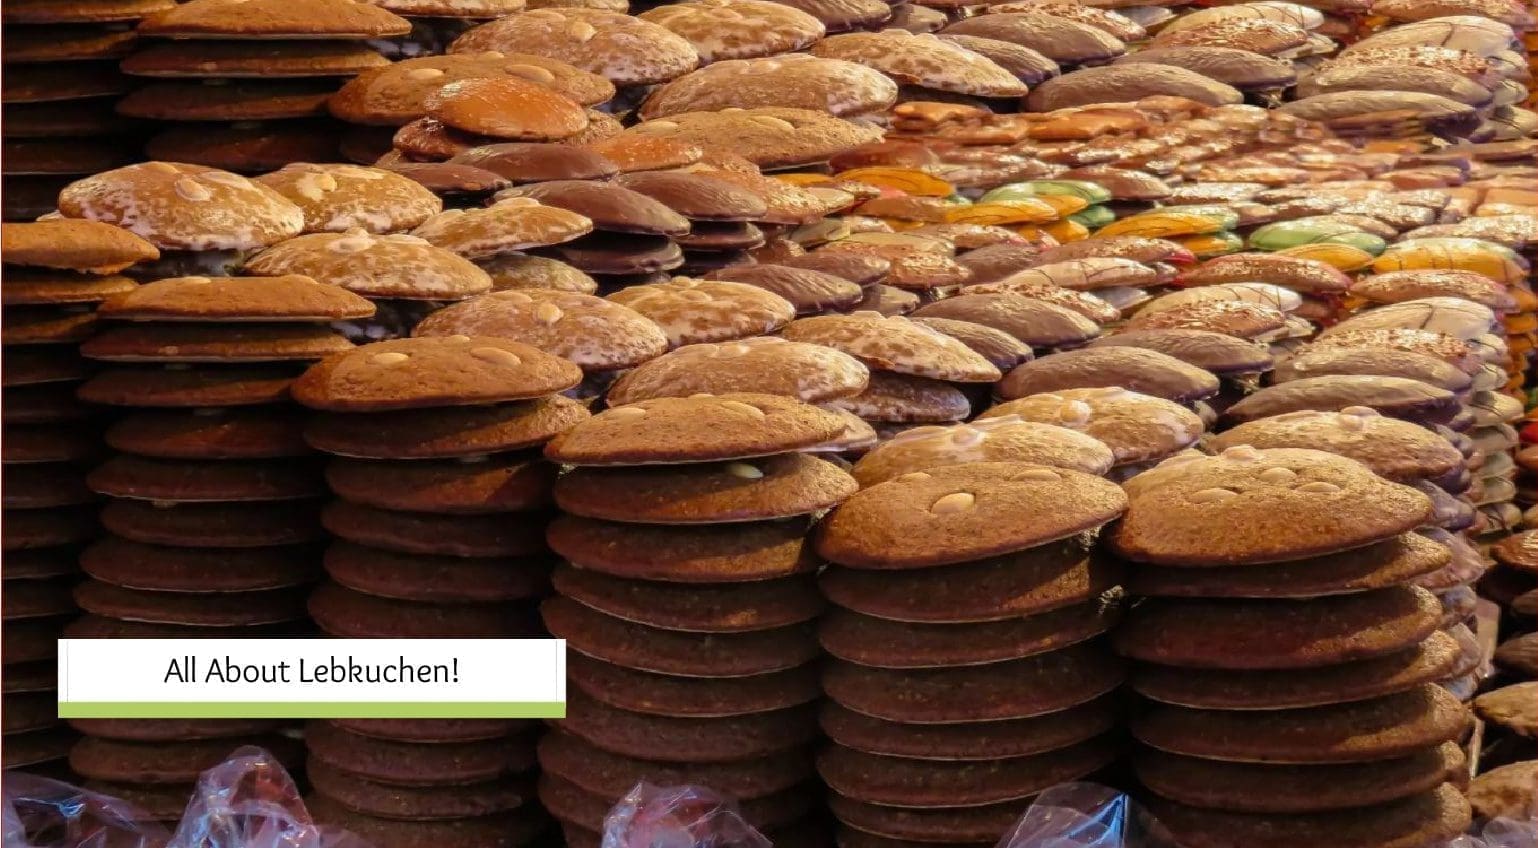 What is Lebkuchen? Lebkuchen are German Spice Cookies!